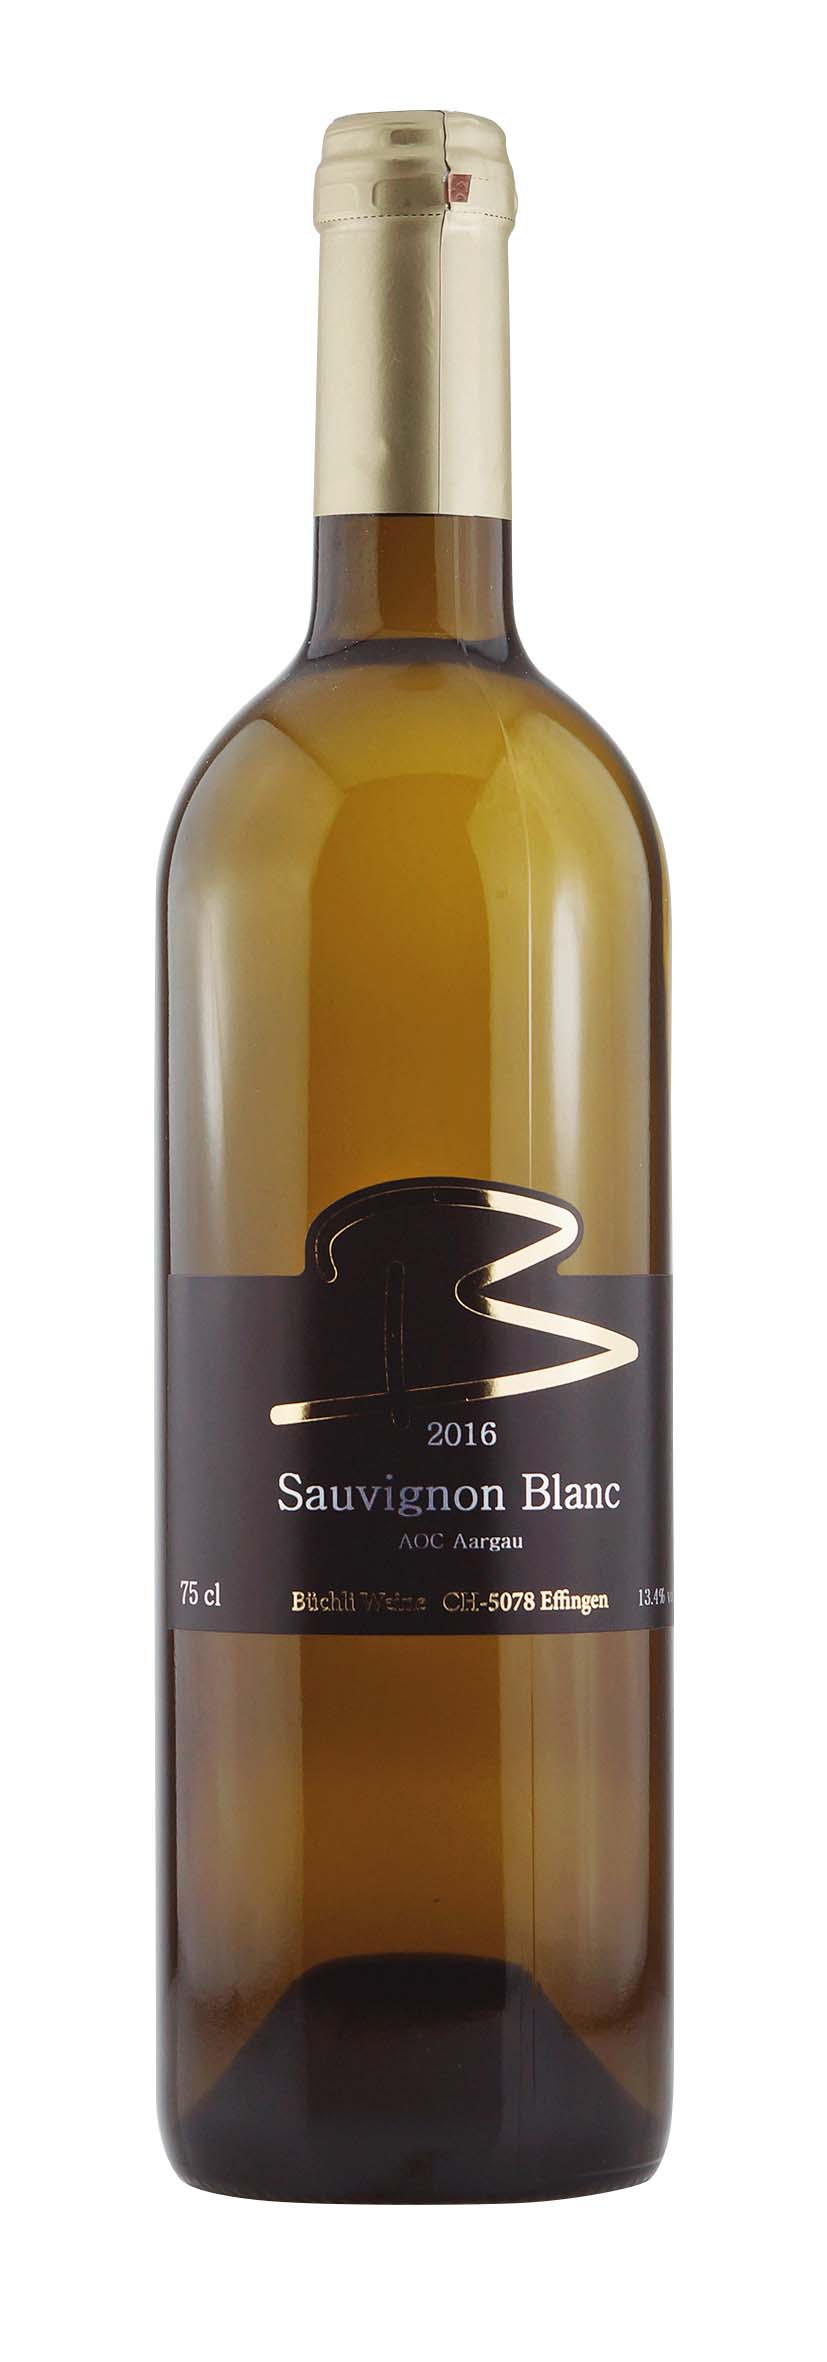 Aargau AOC Sauvignon Blanc 2016